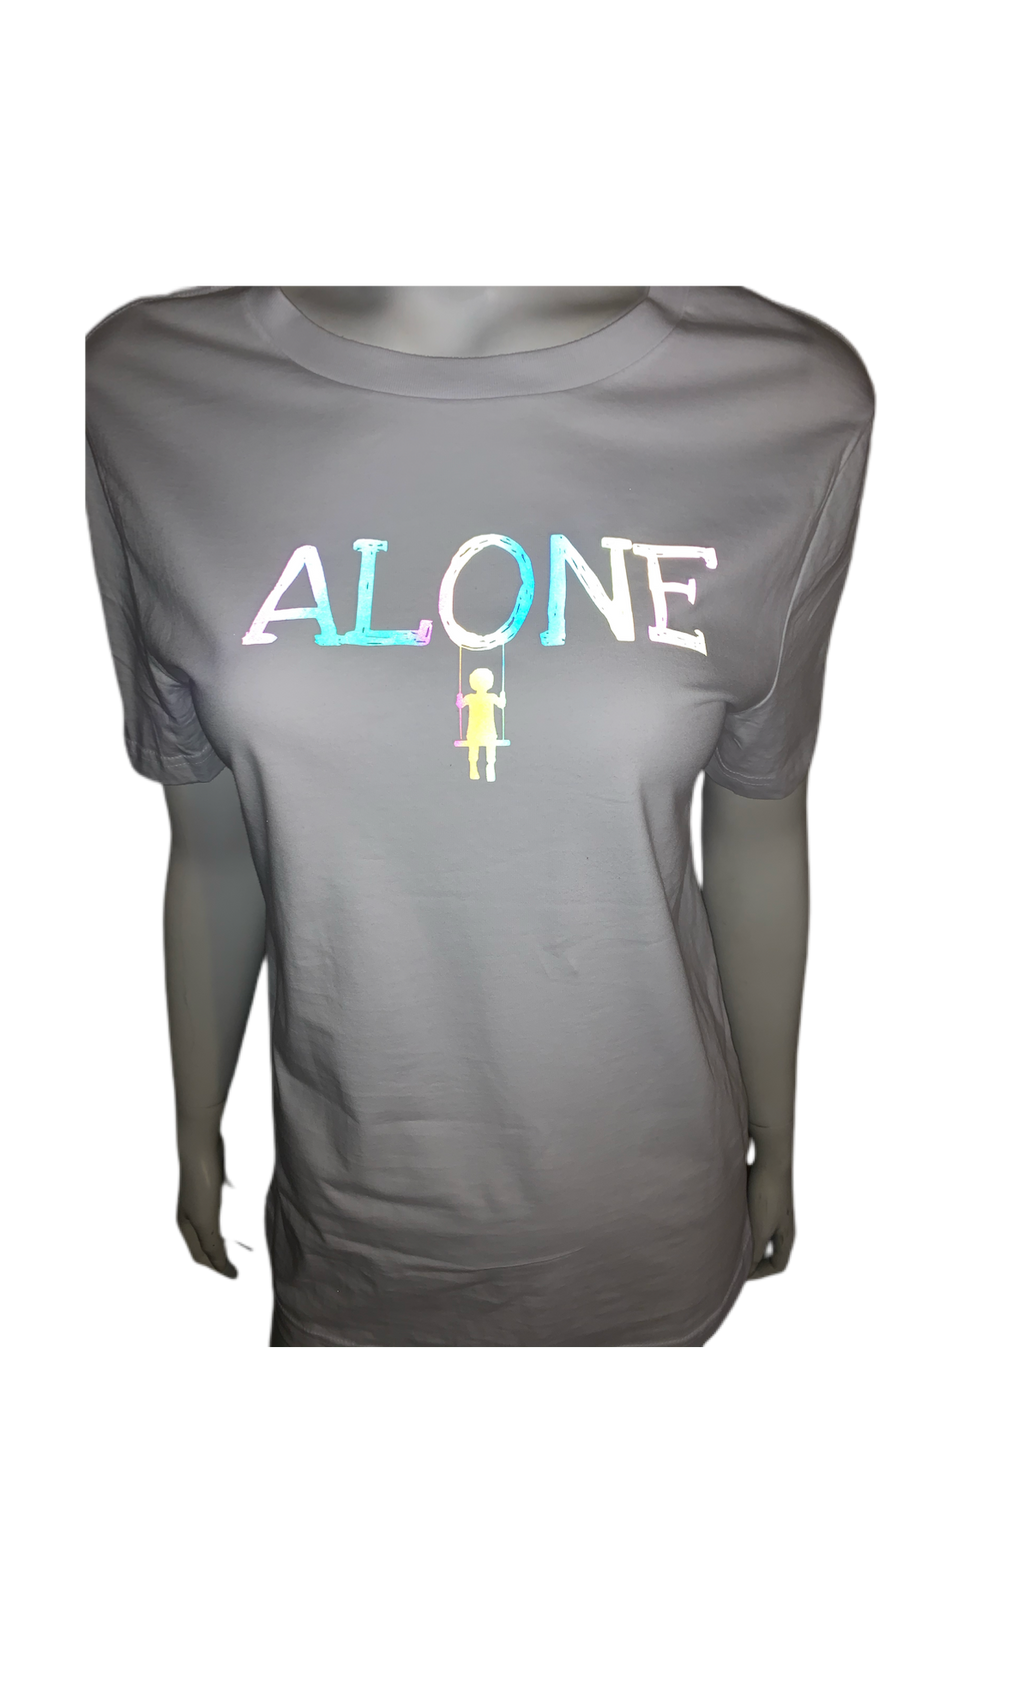 Not Alone T-Shirt (Reflective)